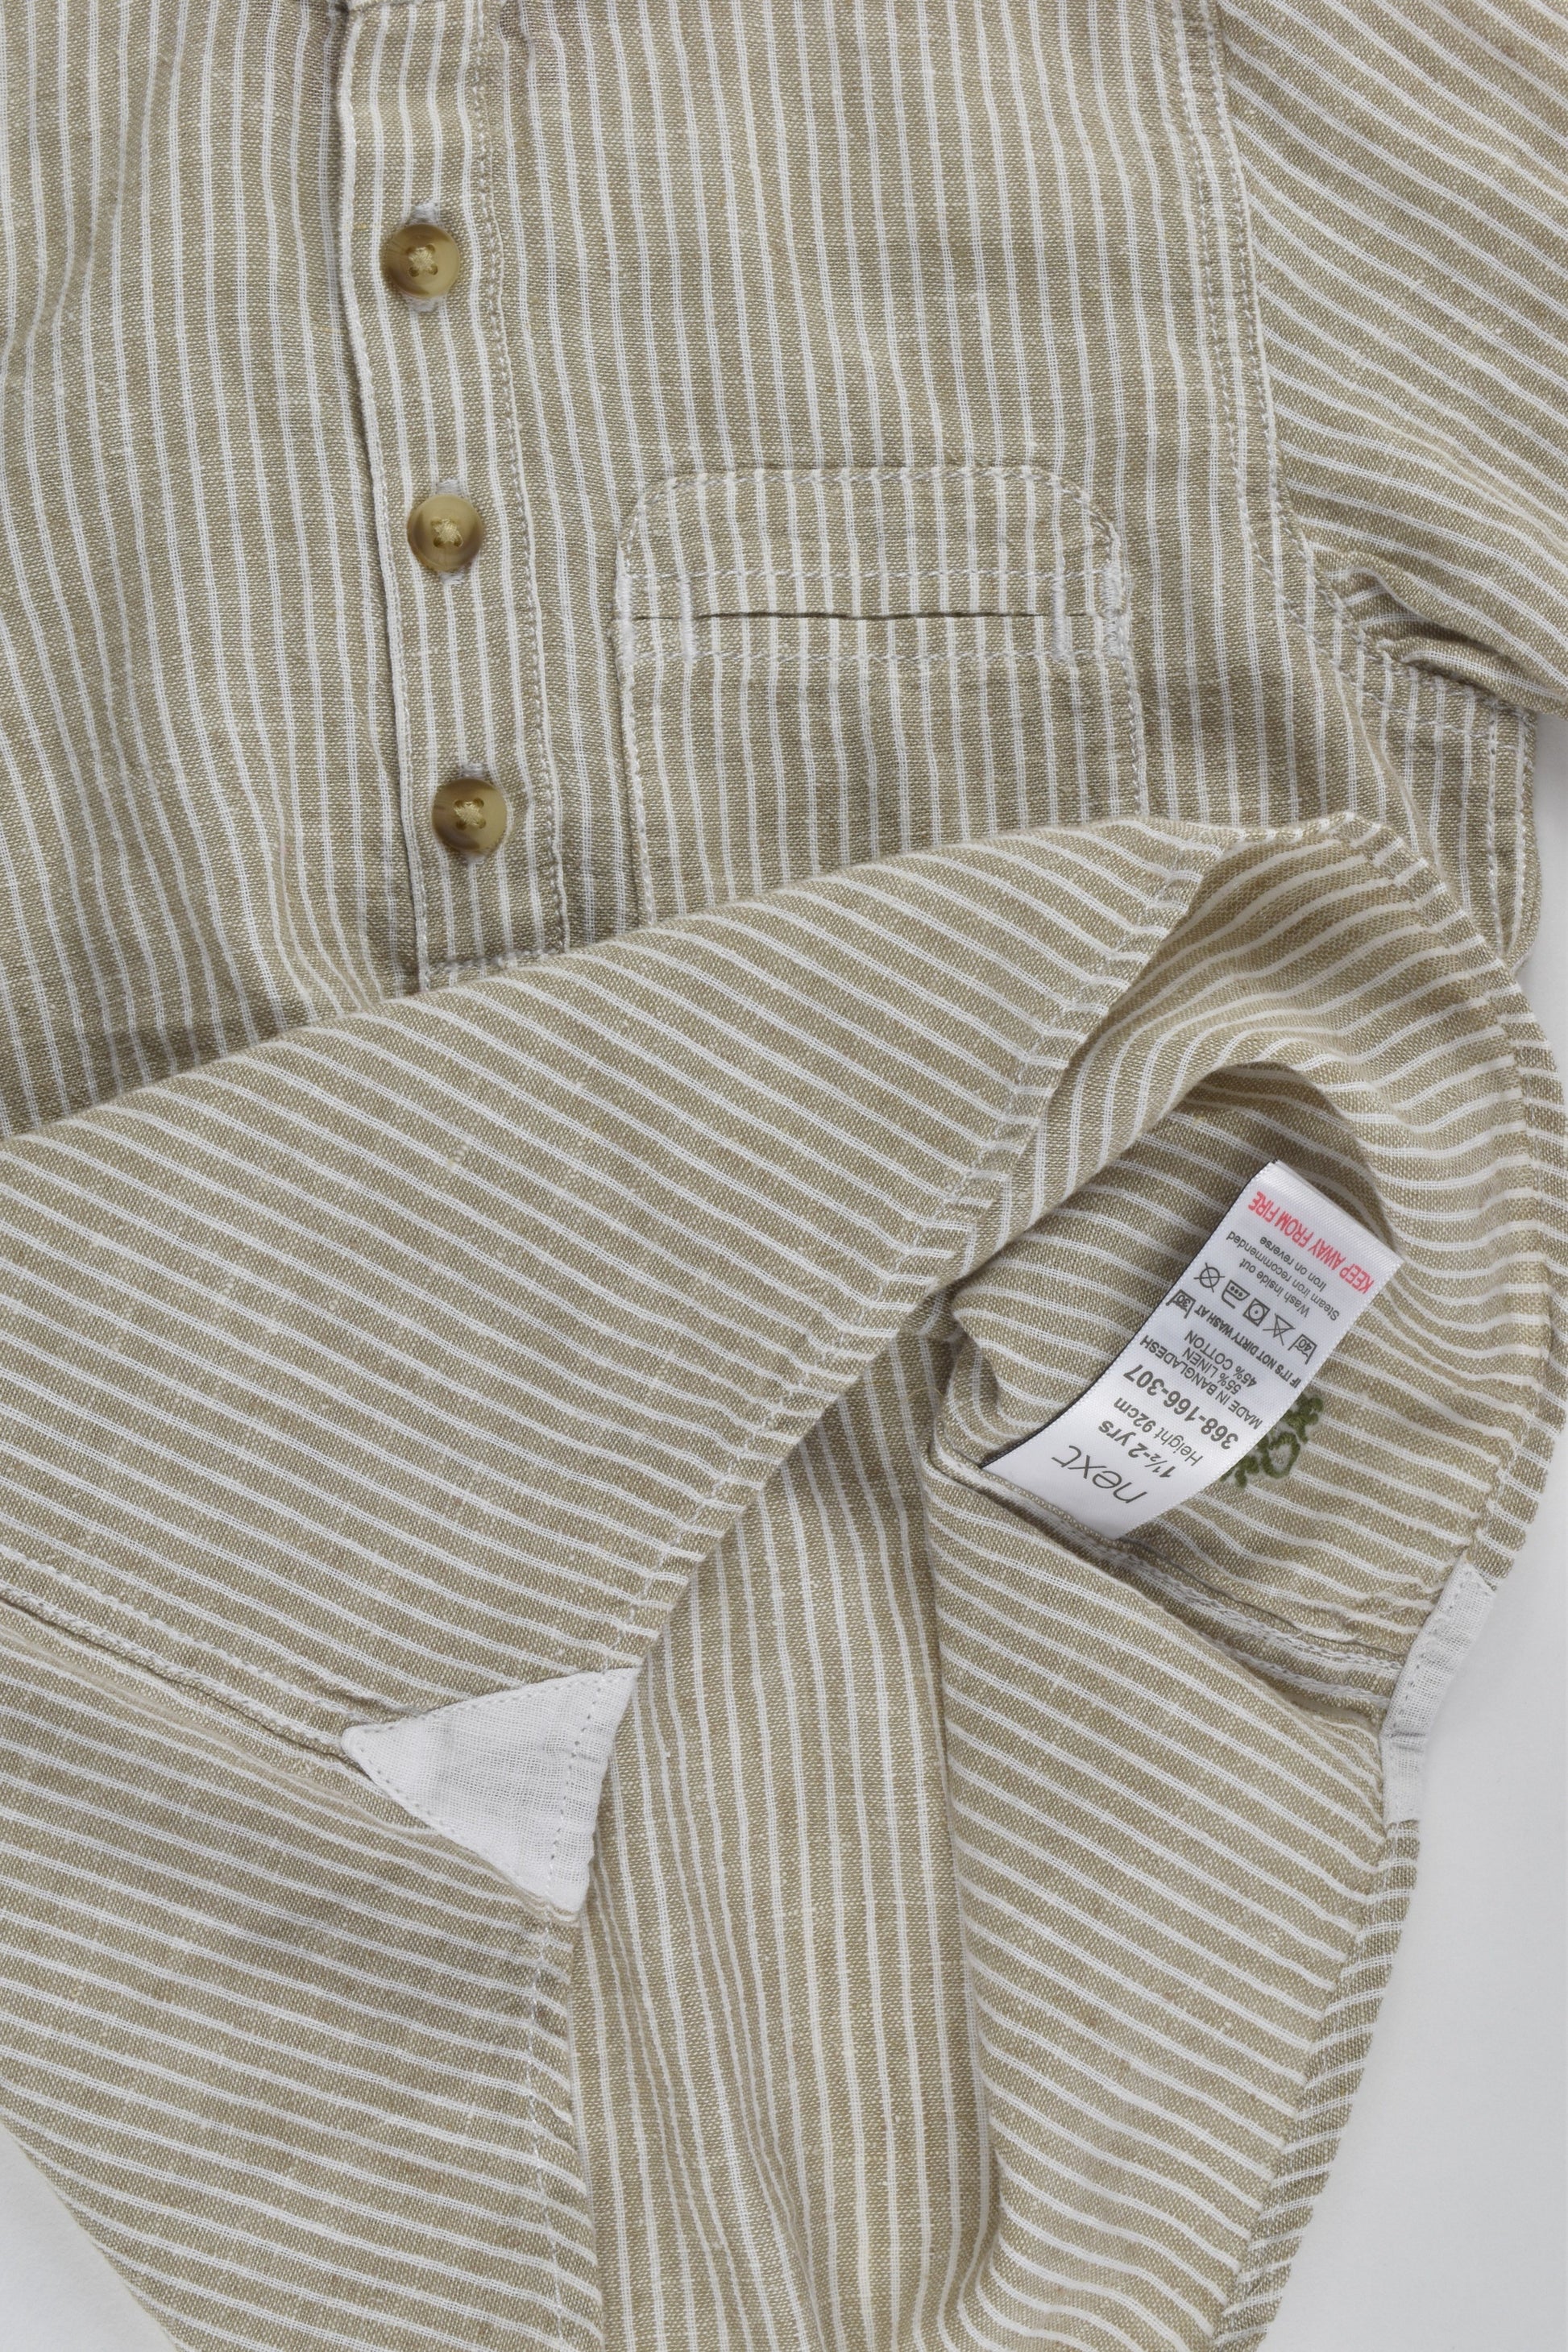 NEW Next Size 2 (92 cm) Linen/Cotton Shirt